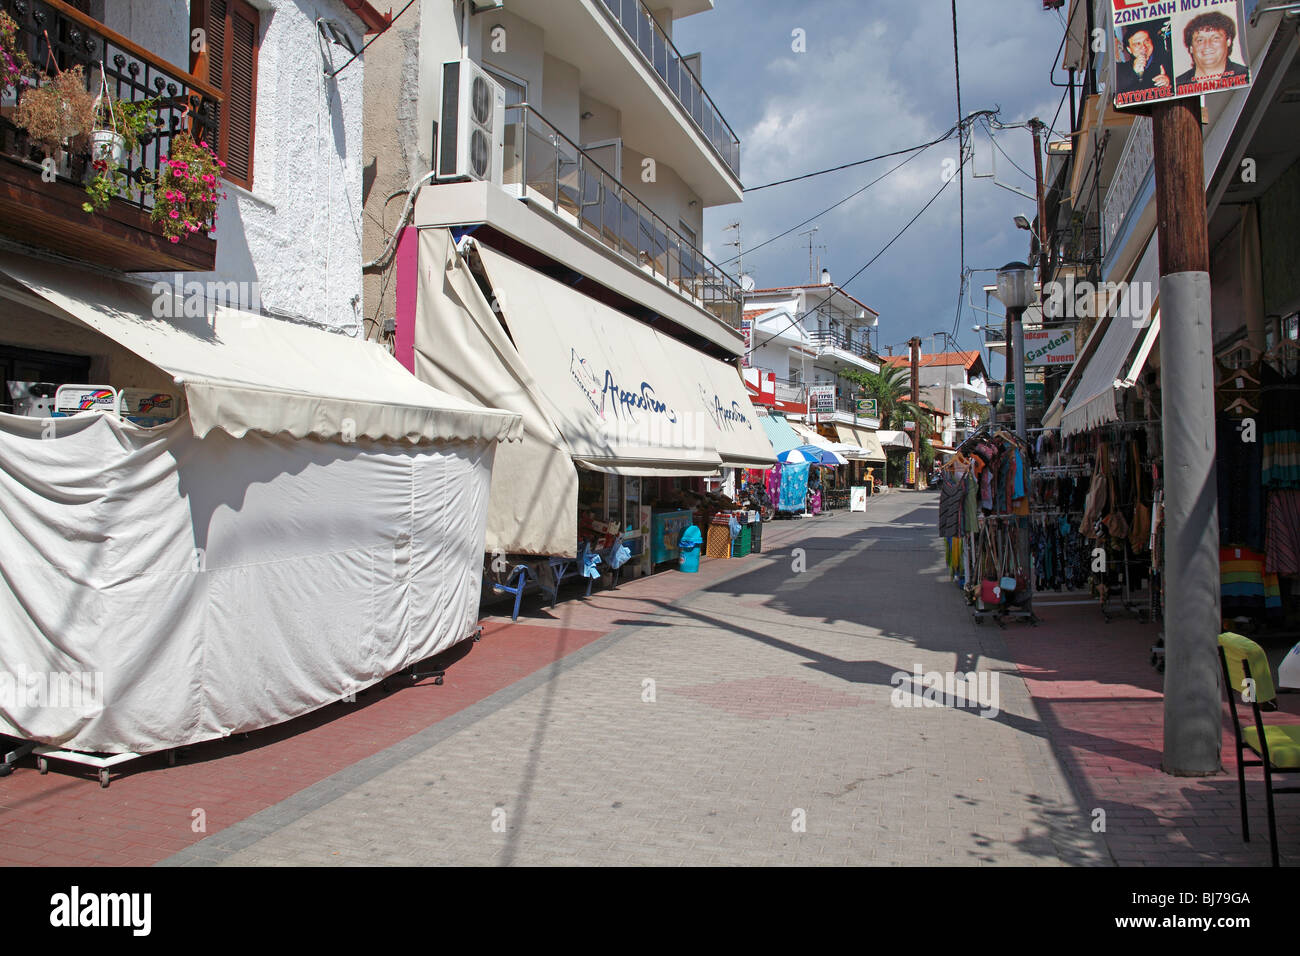 Ruhige Straße Szene, Potos, Thassos, Griechenland, September 2009 Stockfoto